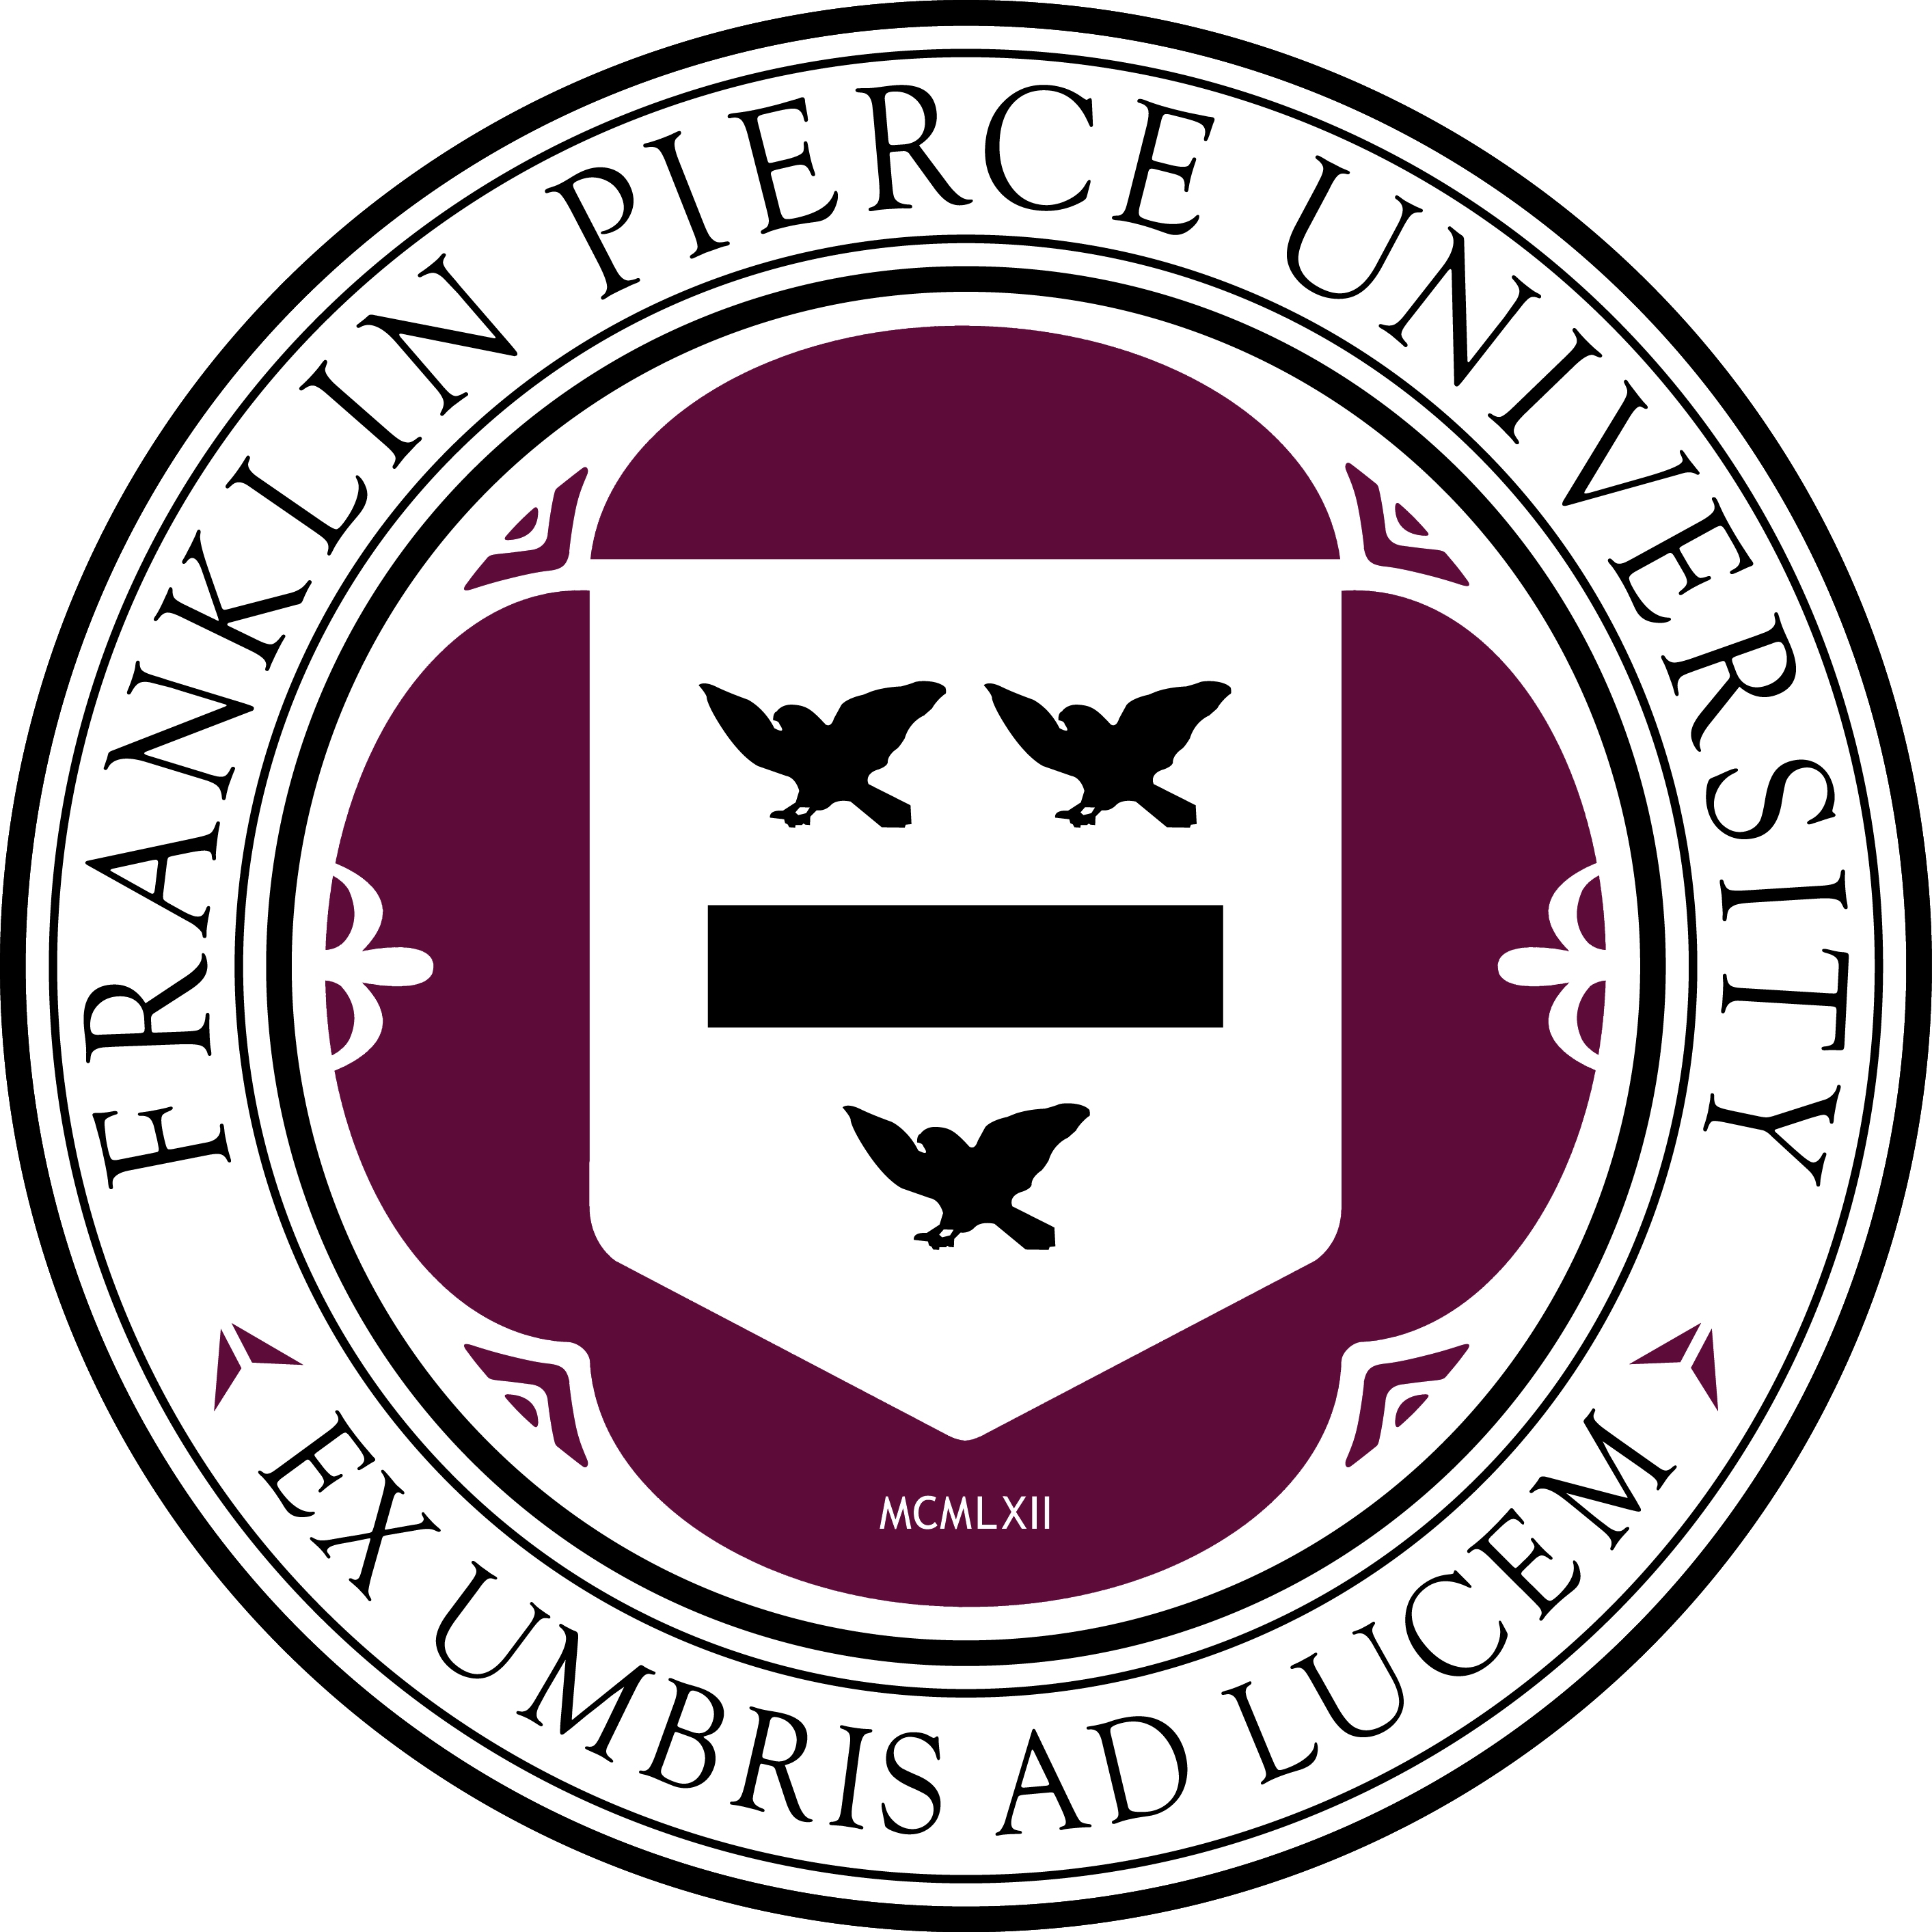 Franklin Pierce University CGPS